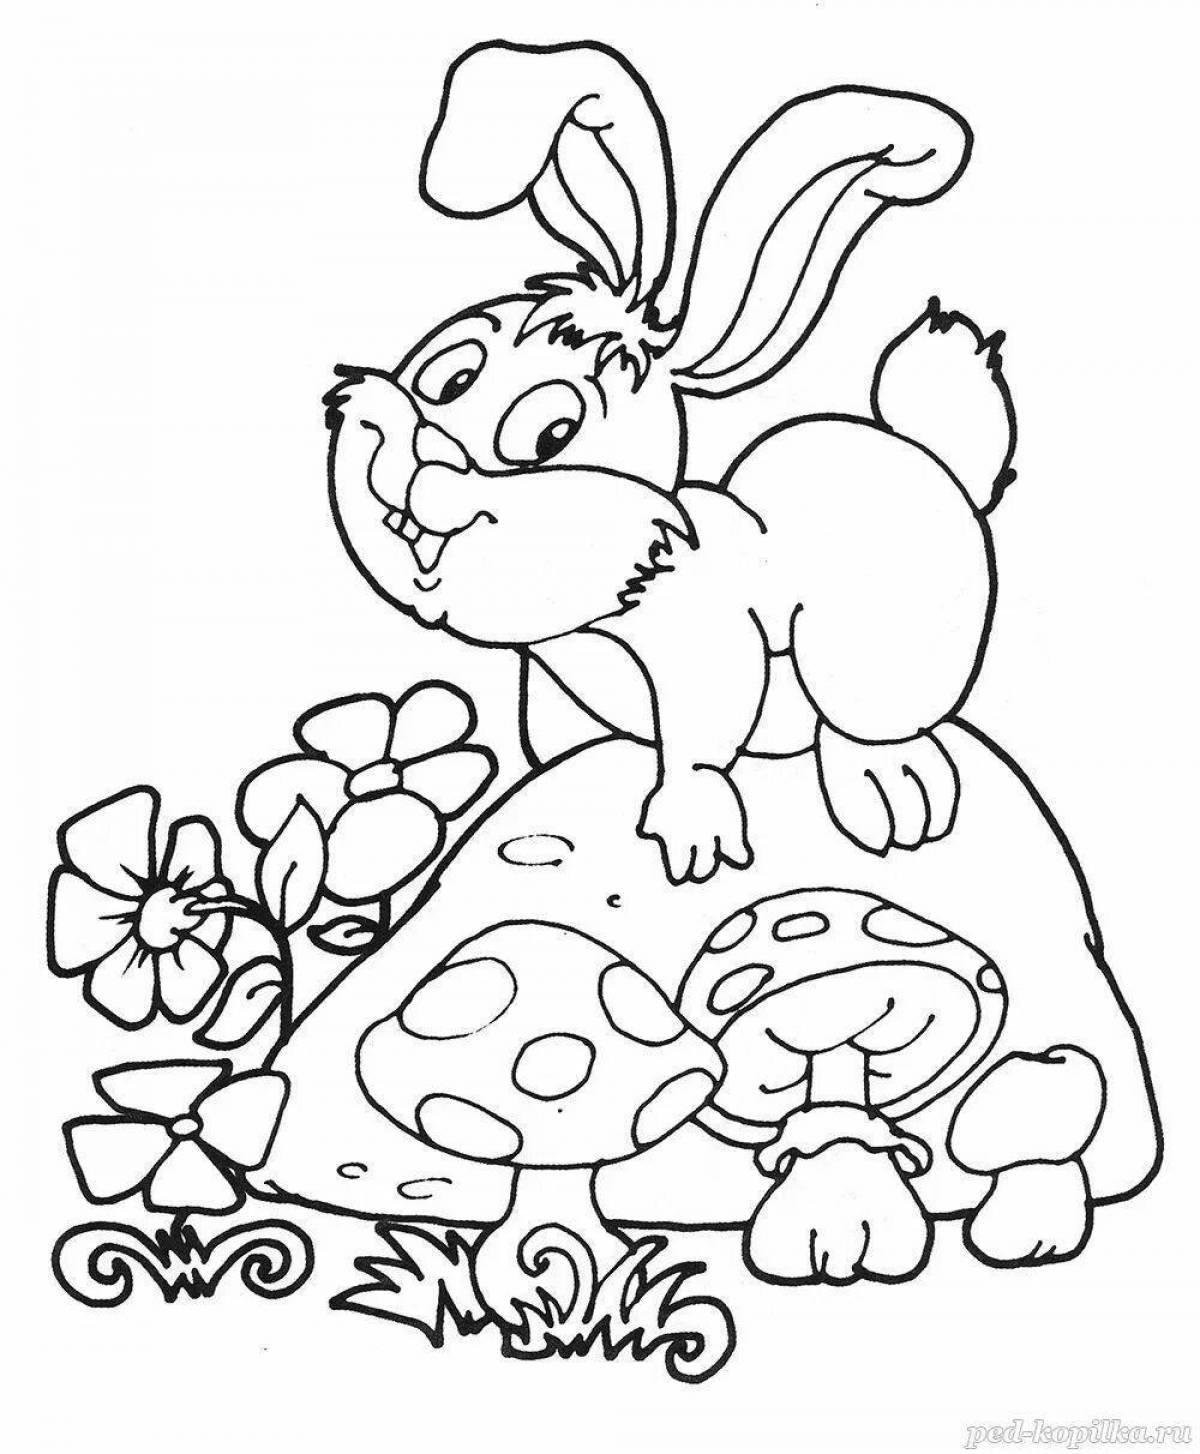 Fun coloring rabbit